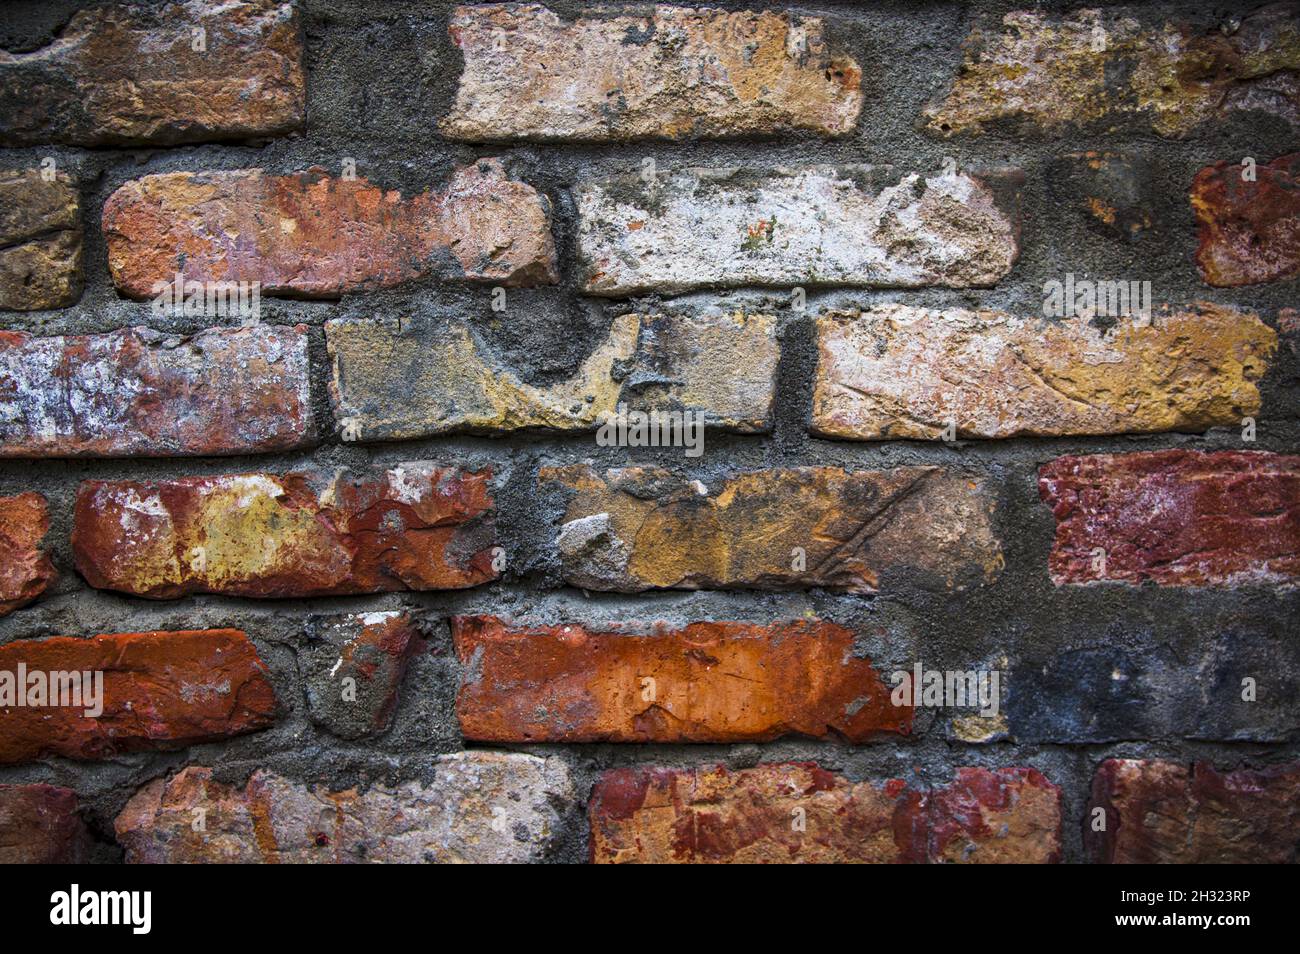 27,958 Brick Wall Free Royalty-Free Images, Stock Photos